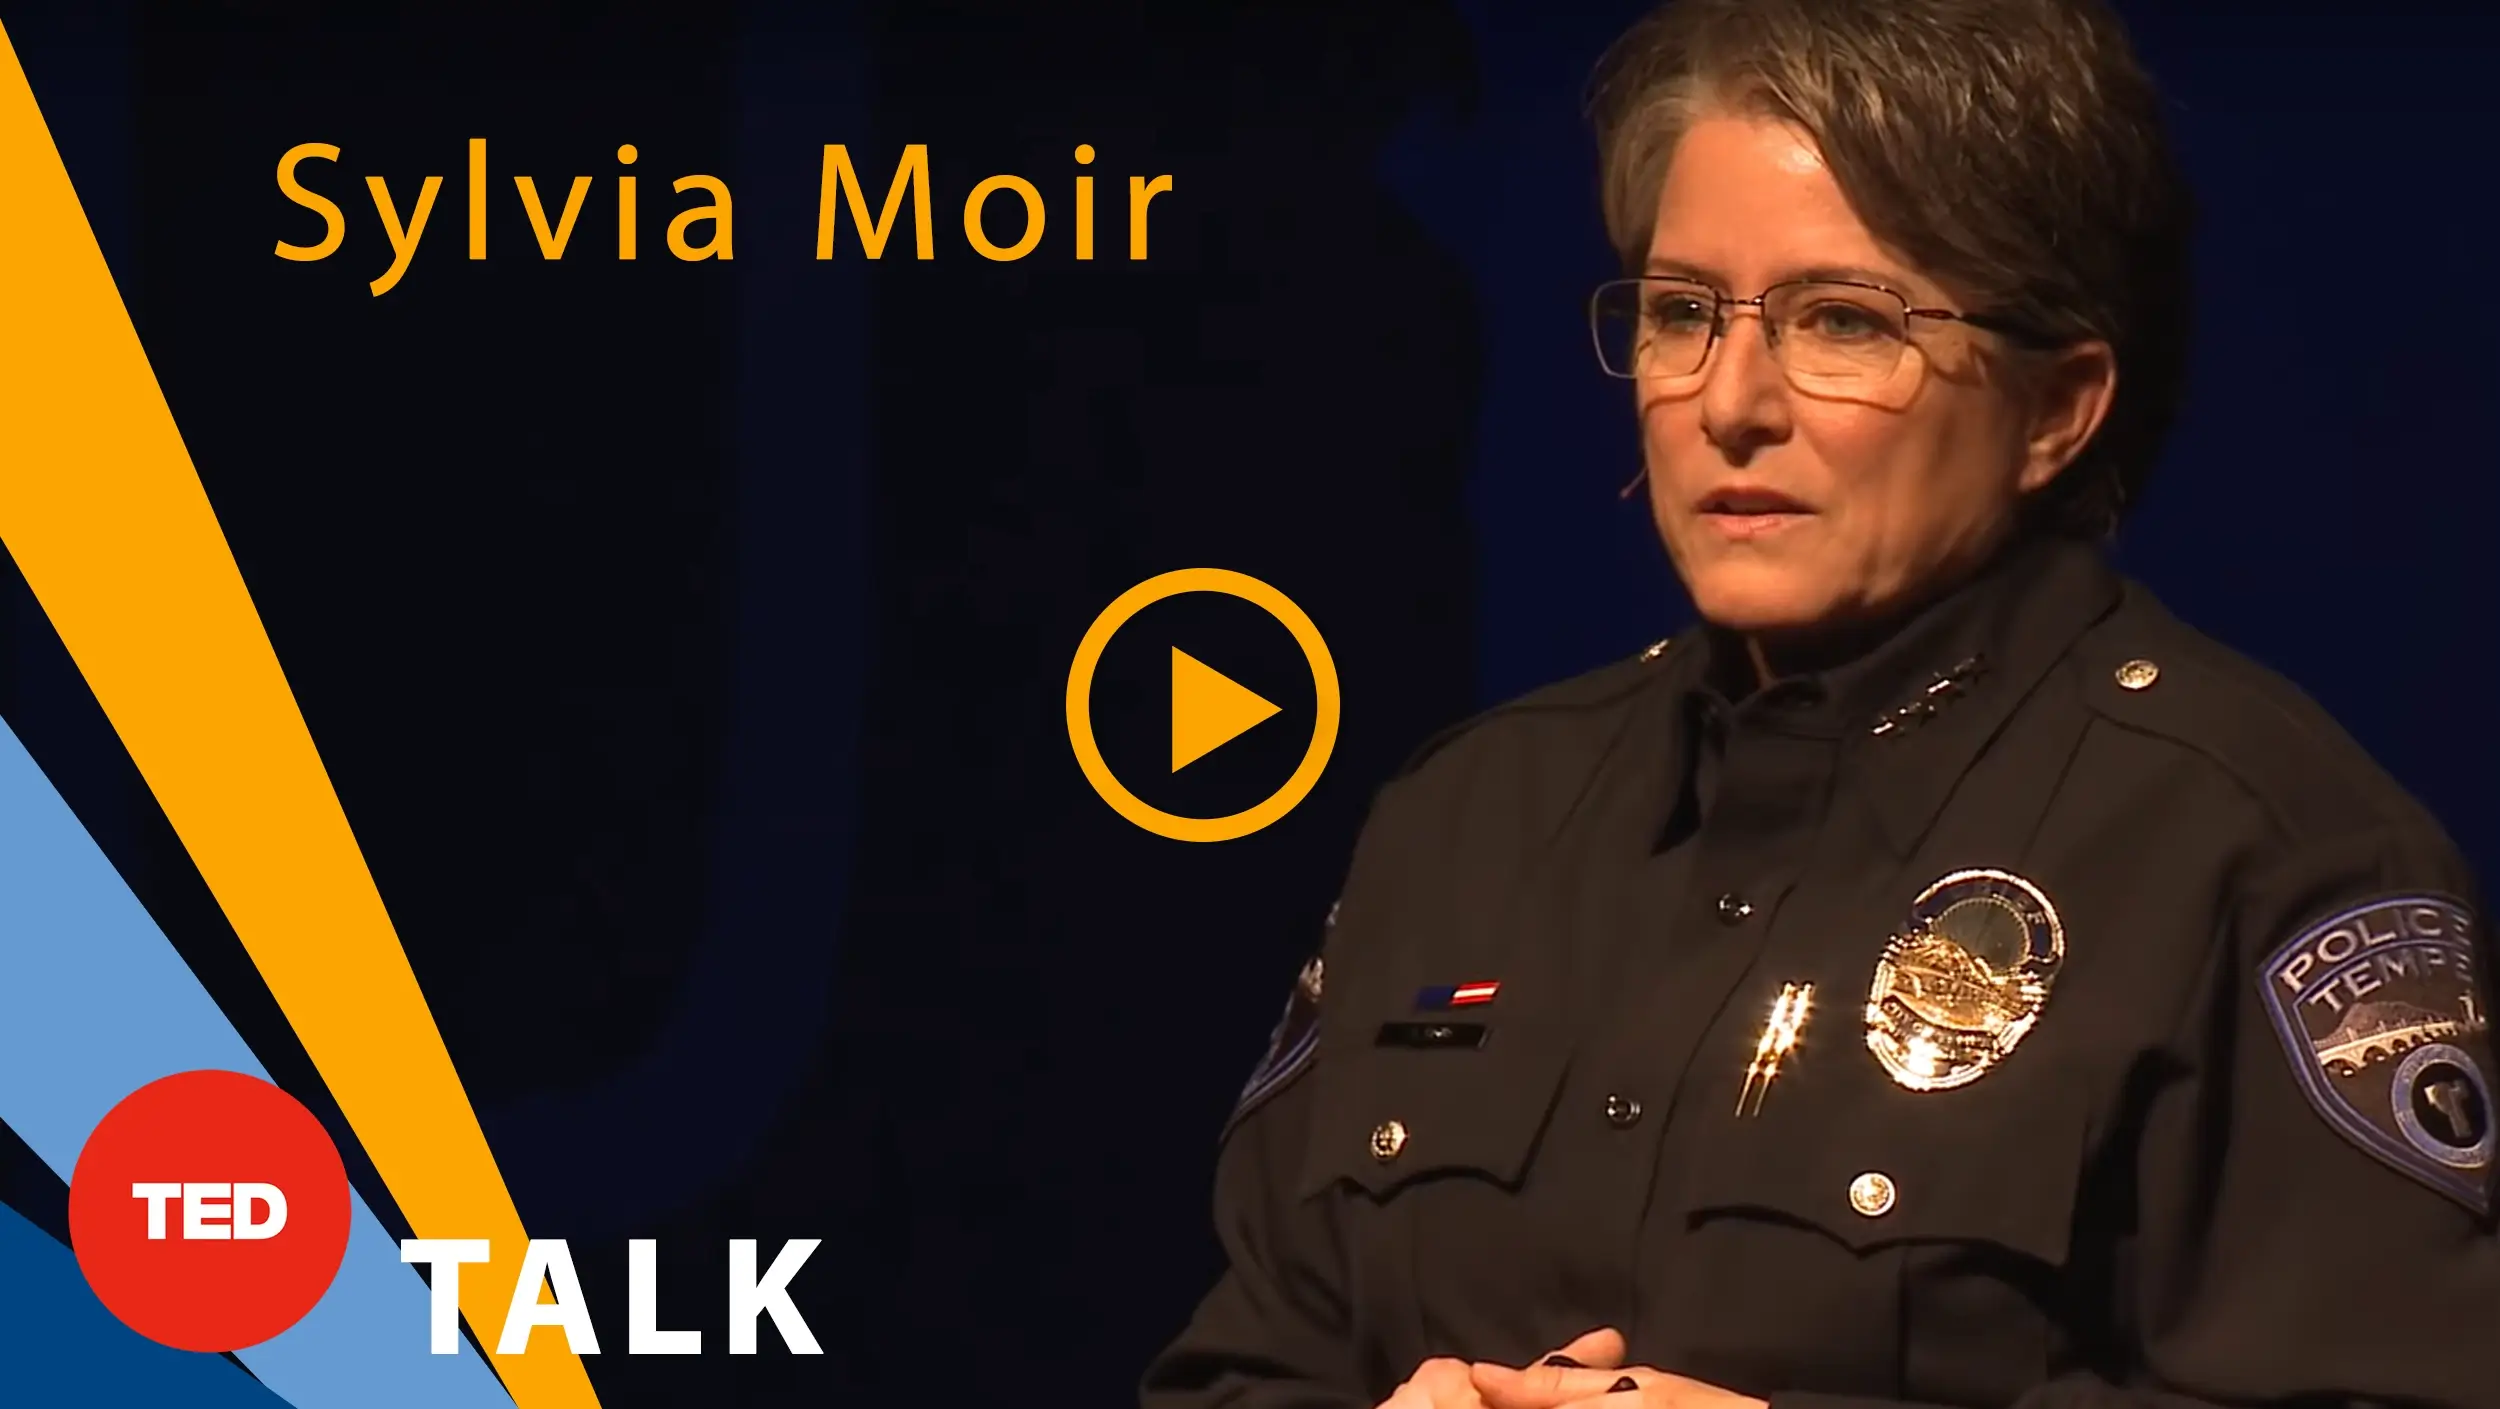 Sylvia Moir speaking at TED Talk